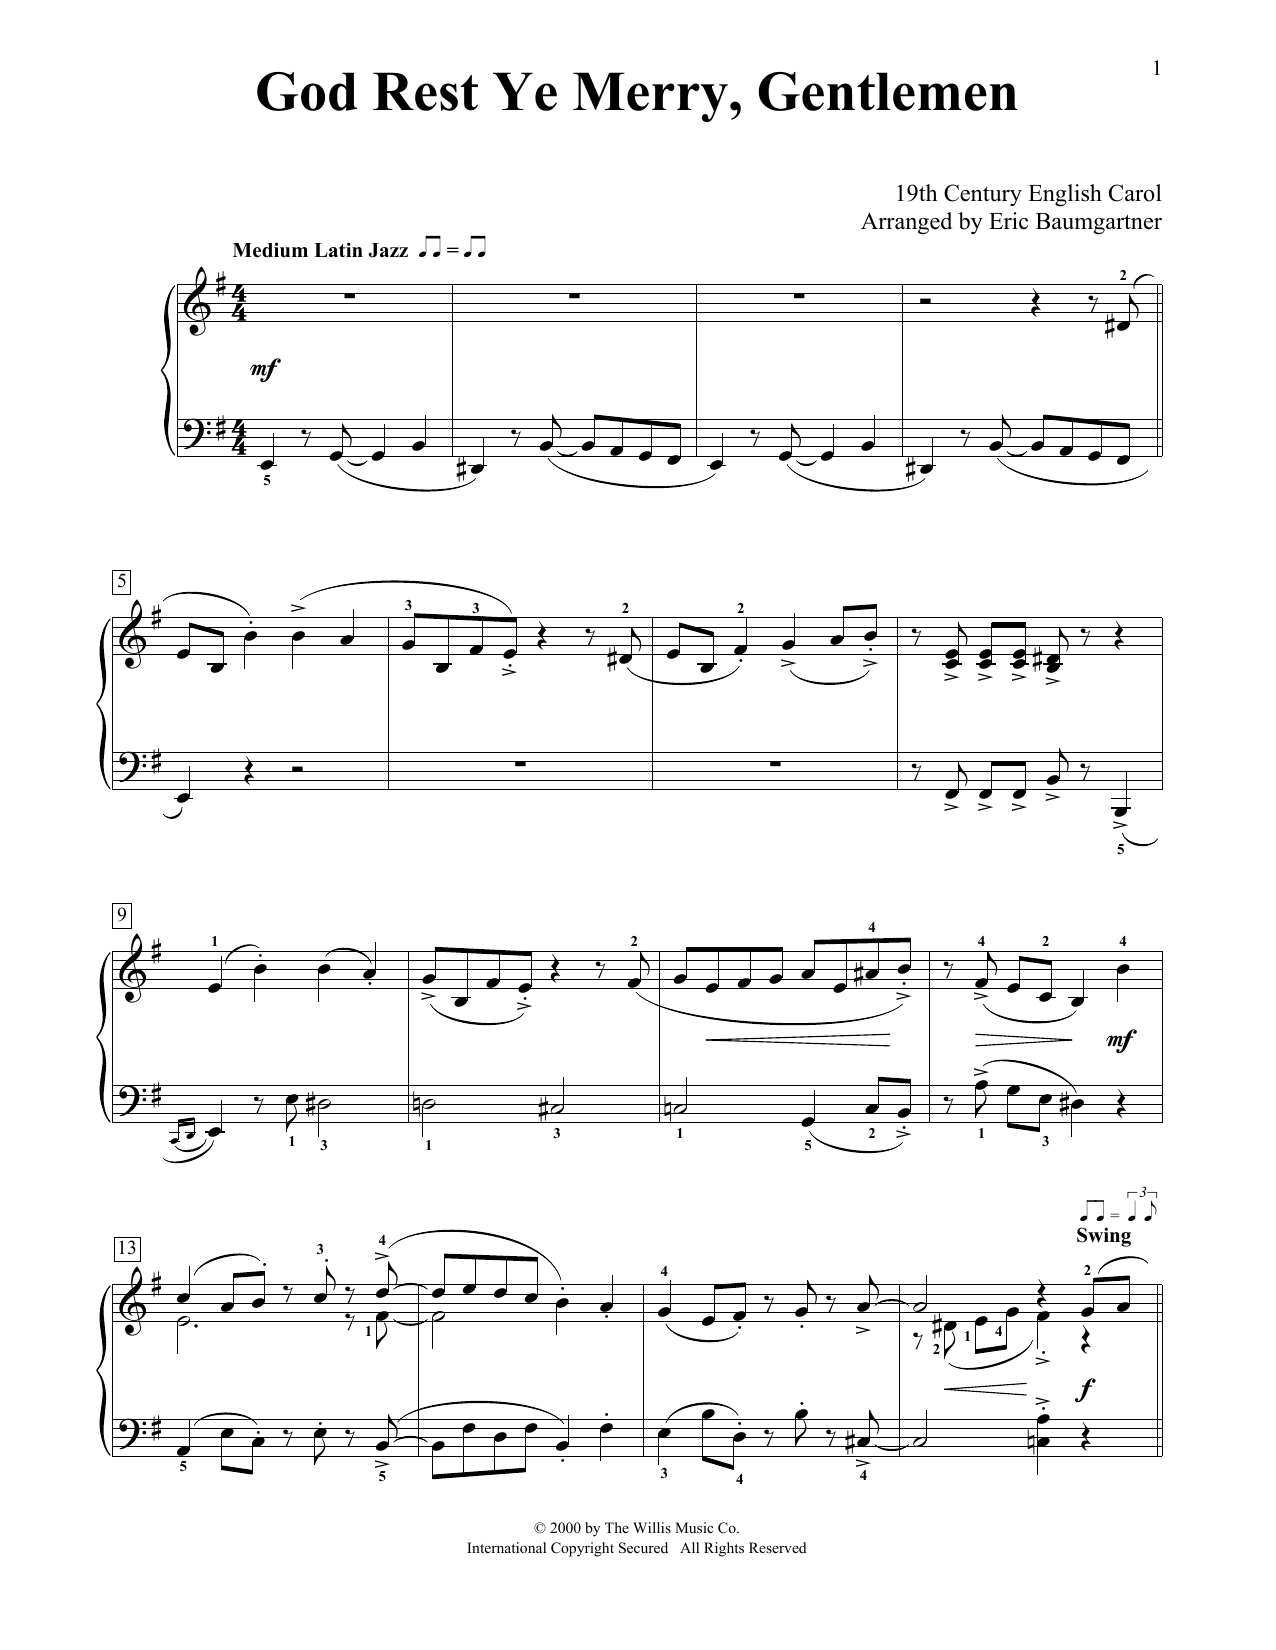 19th Century English Carol God Rest Ye Merry, Gentlemen [Jazz version] (arr. Eric Baumgartner) Sheet Music Notes & Chords for Educational Piano - Download or Print PDF